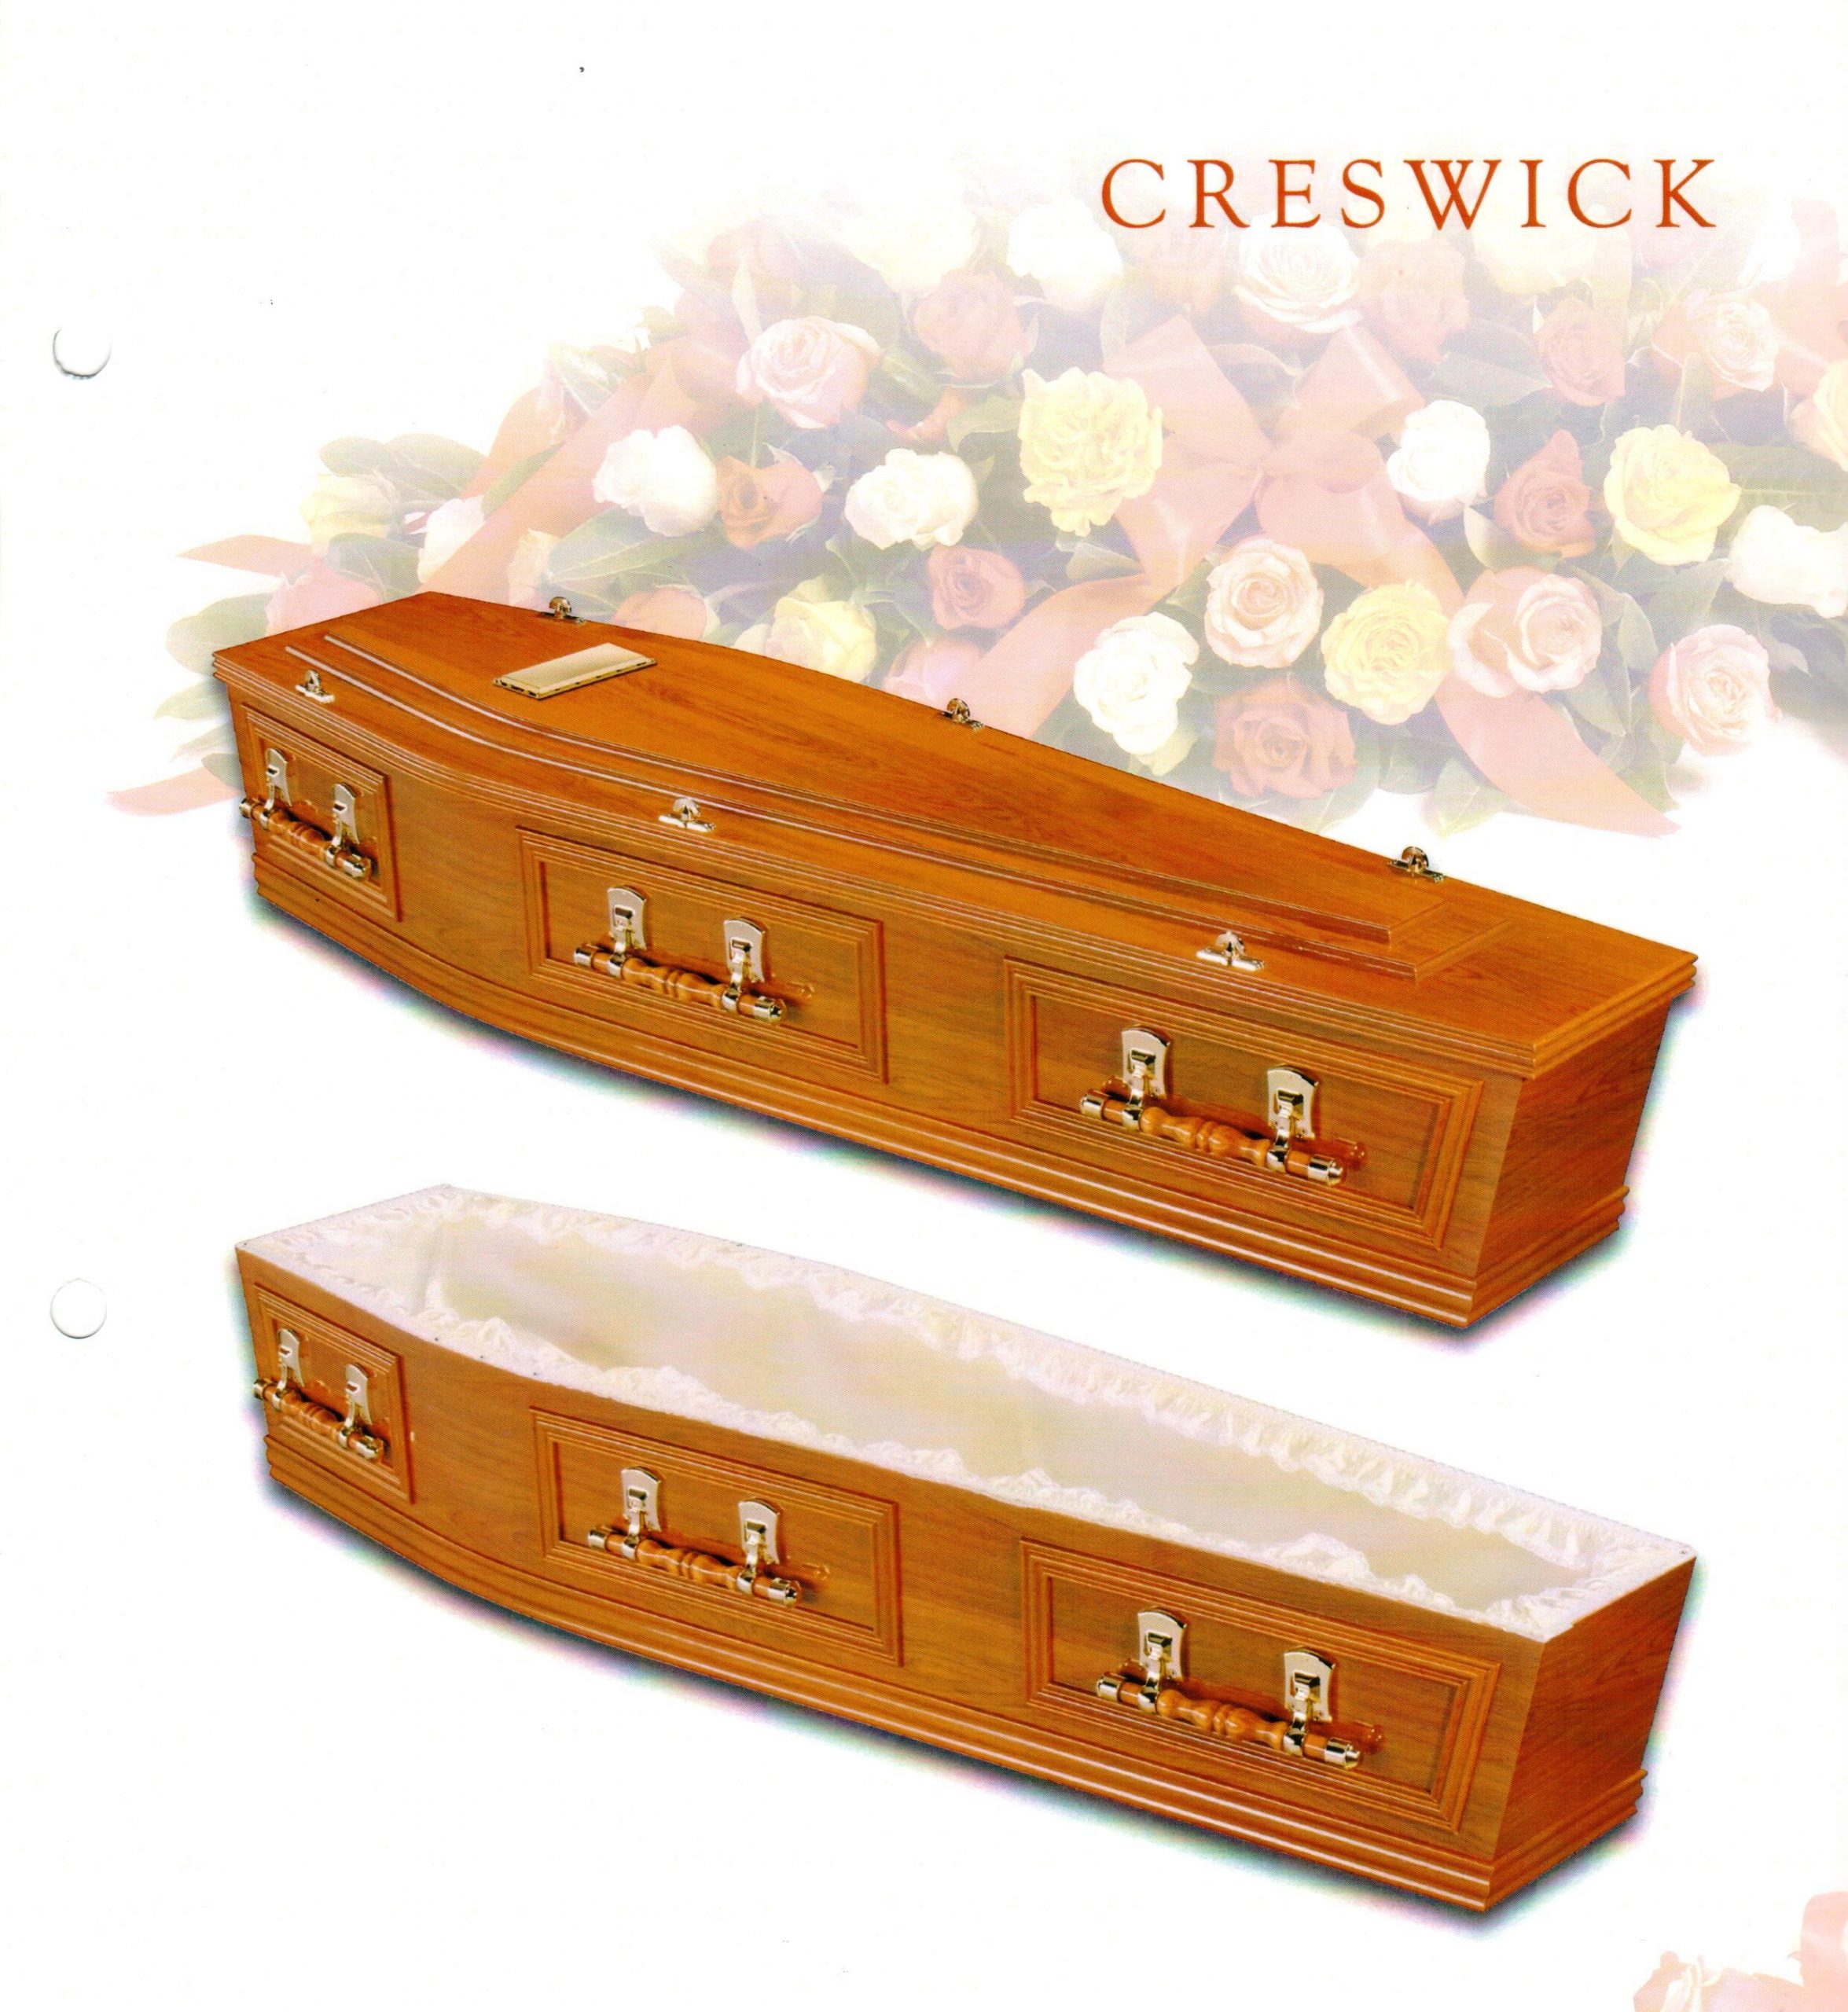 Creswick Coffin